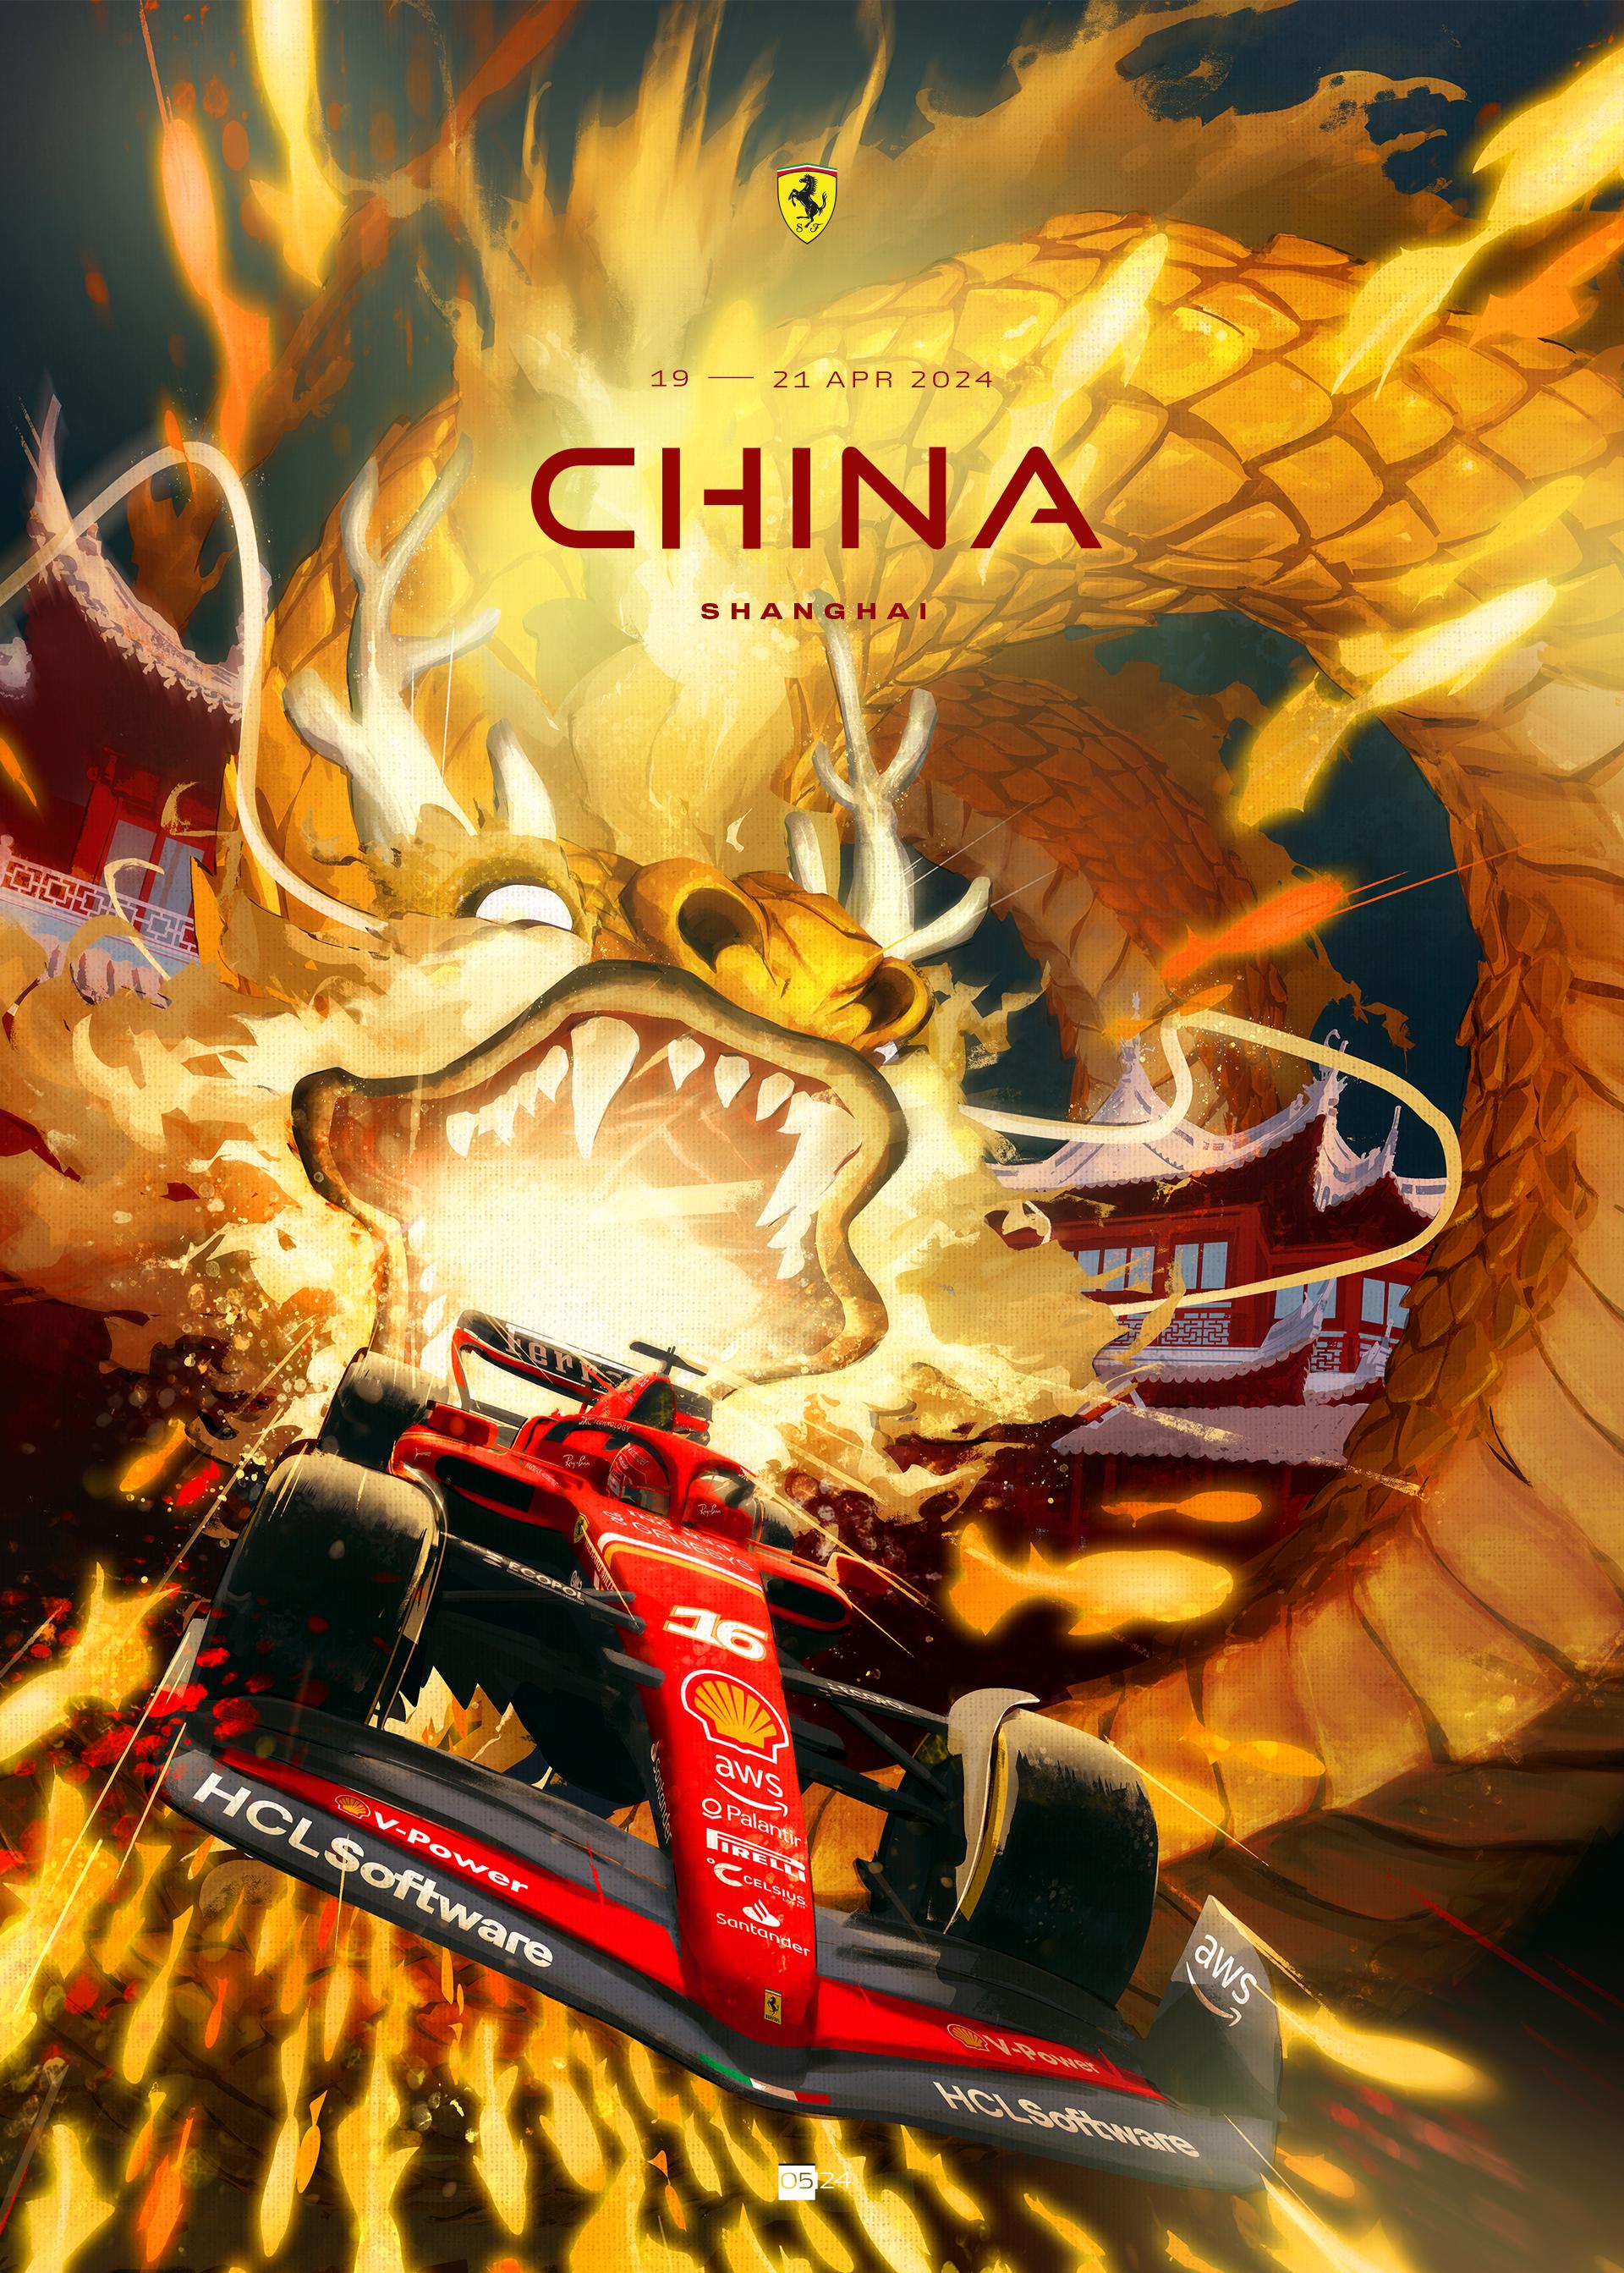 f1 2024 ferrari cover art grand prix race poster china